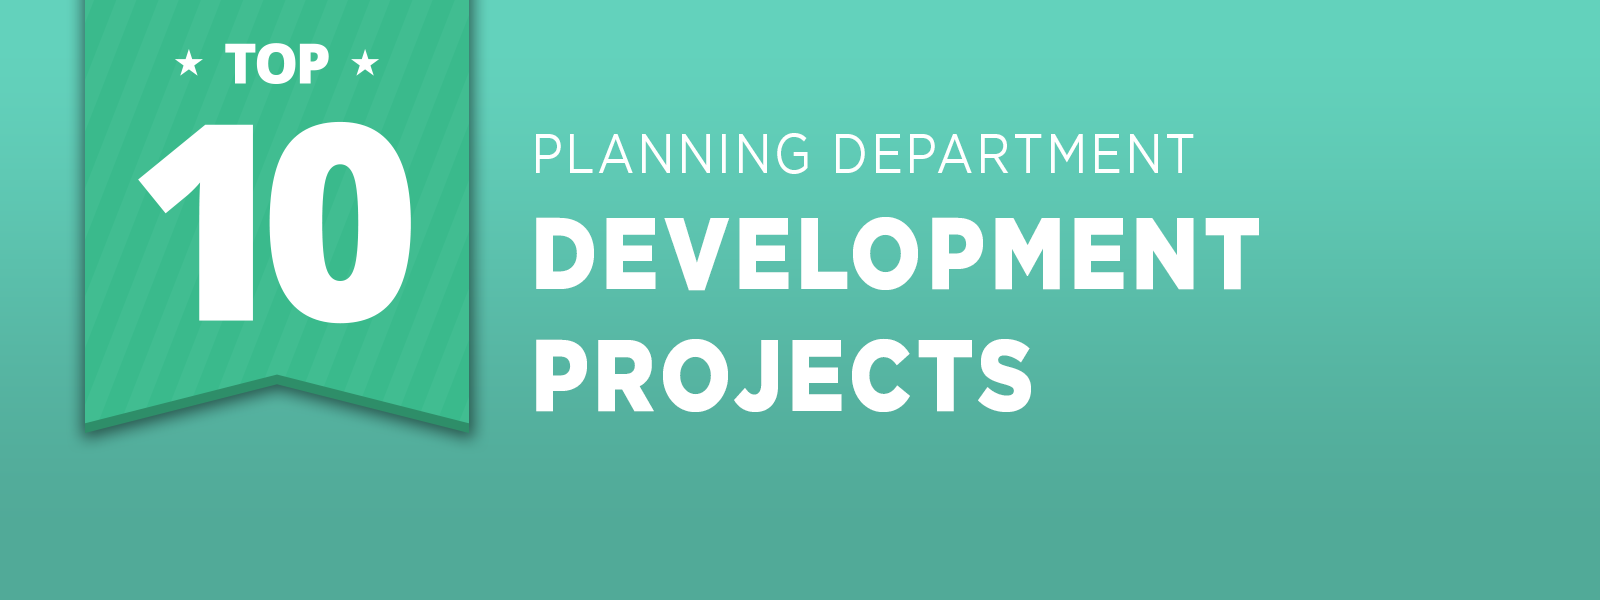 2017 Development Projects